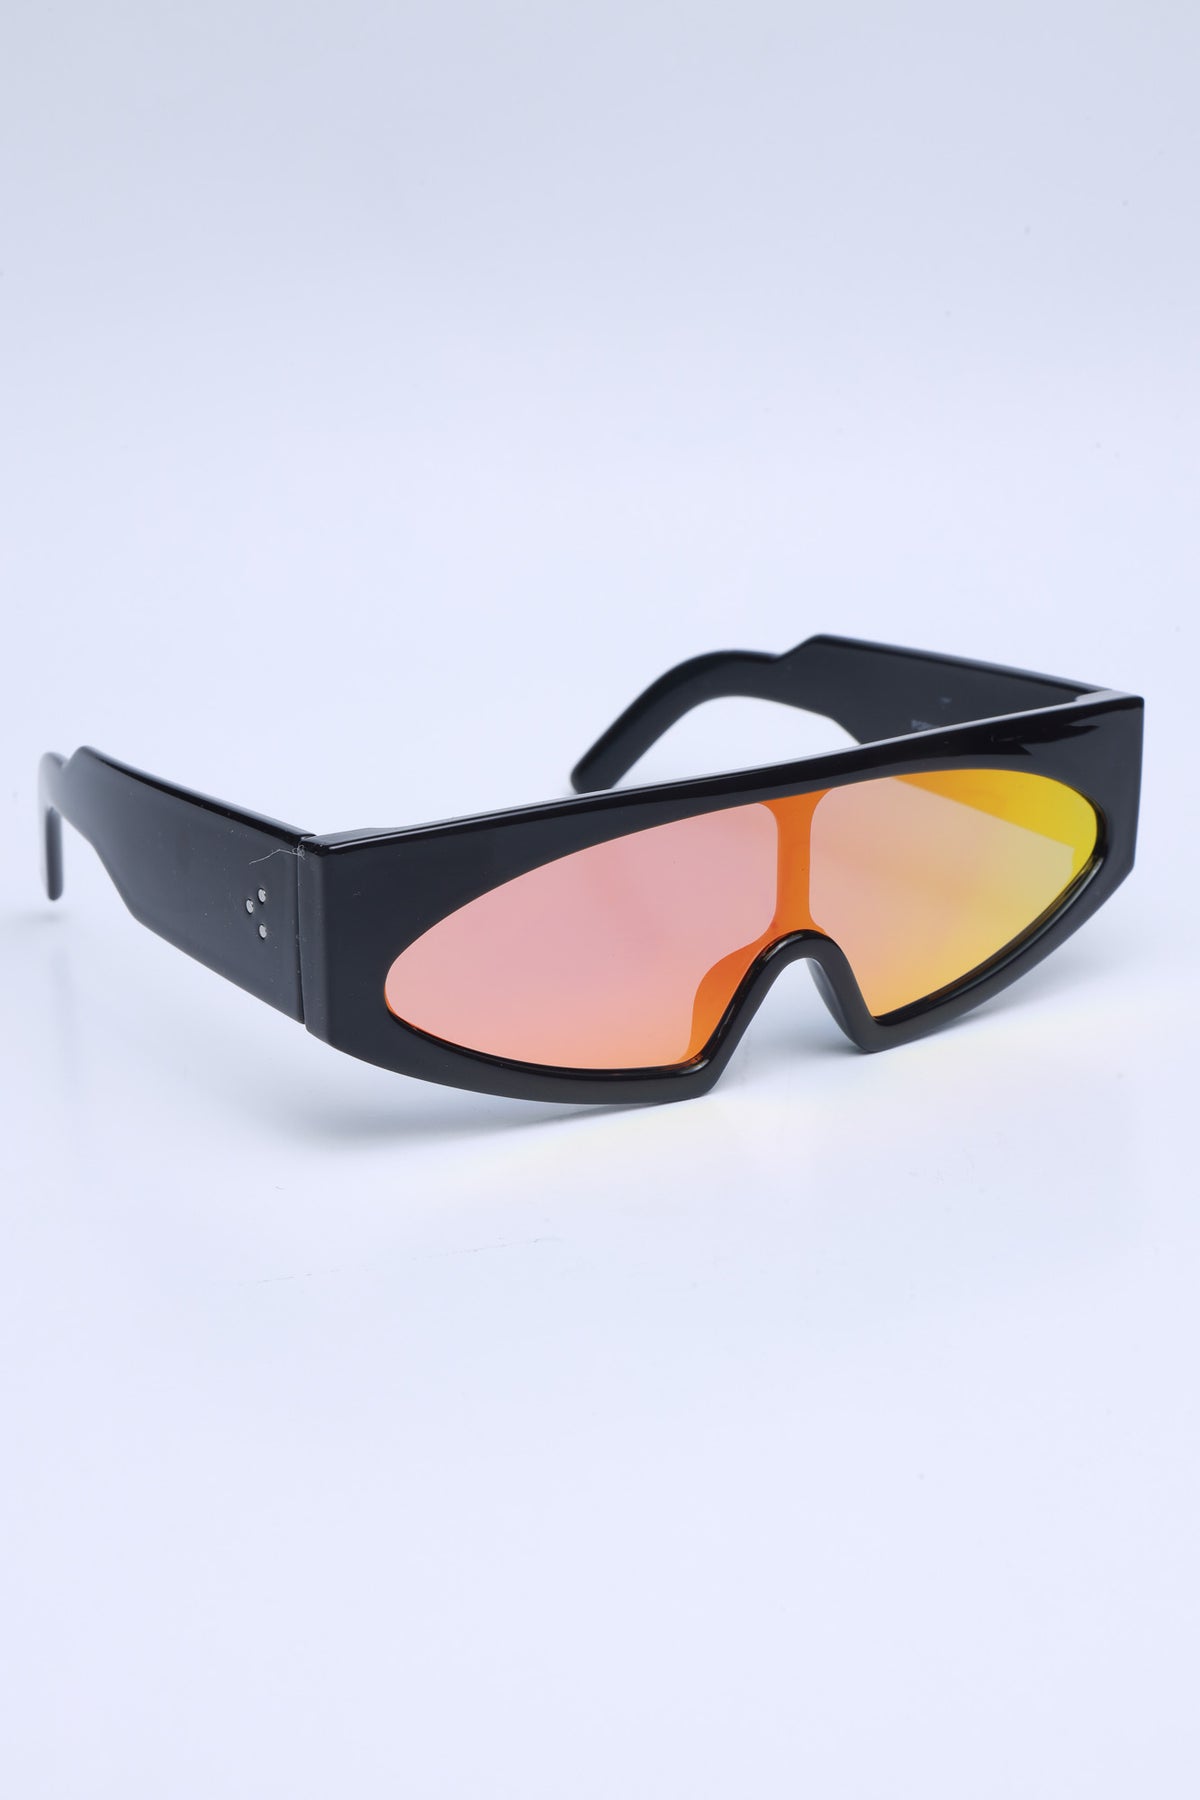 
              Bright Eyes Square Shield Sunglasses - Black/Orange - Swank A Posh
            